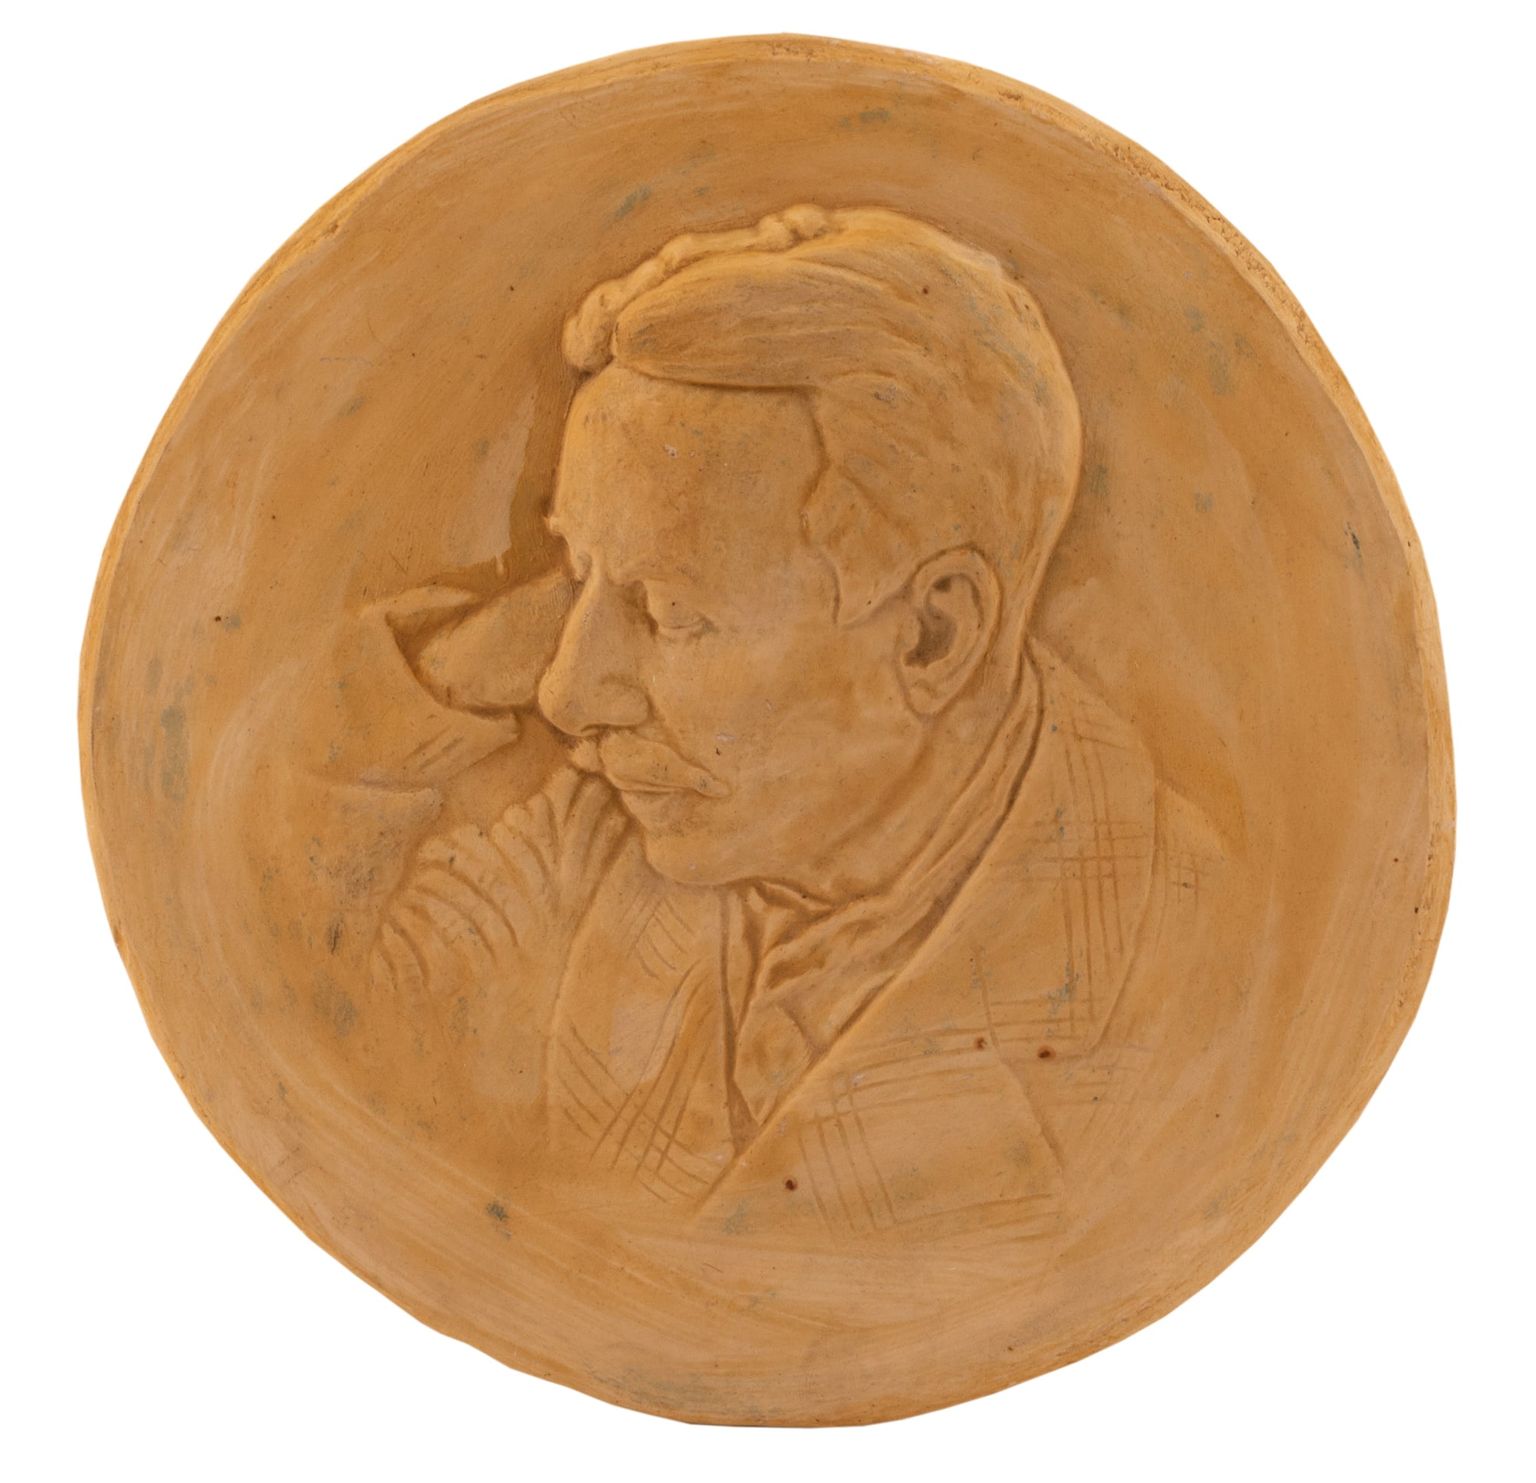 Plaster Model of the Commemorative Medal